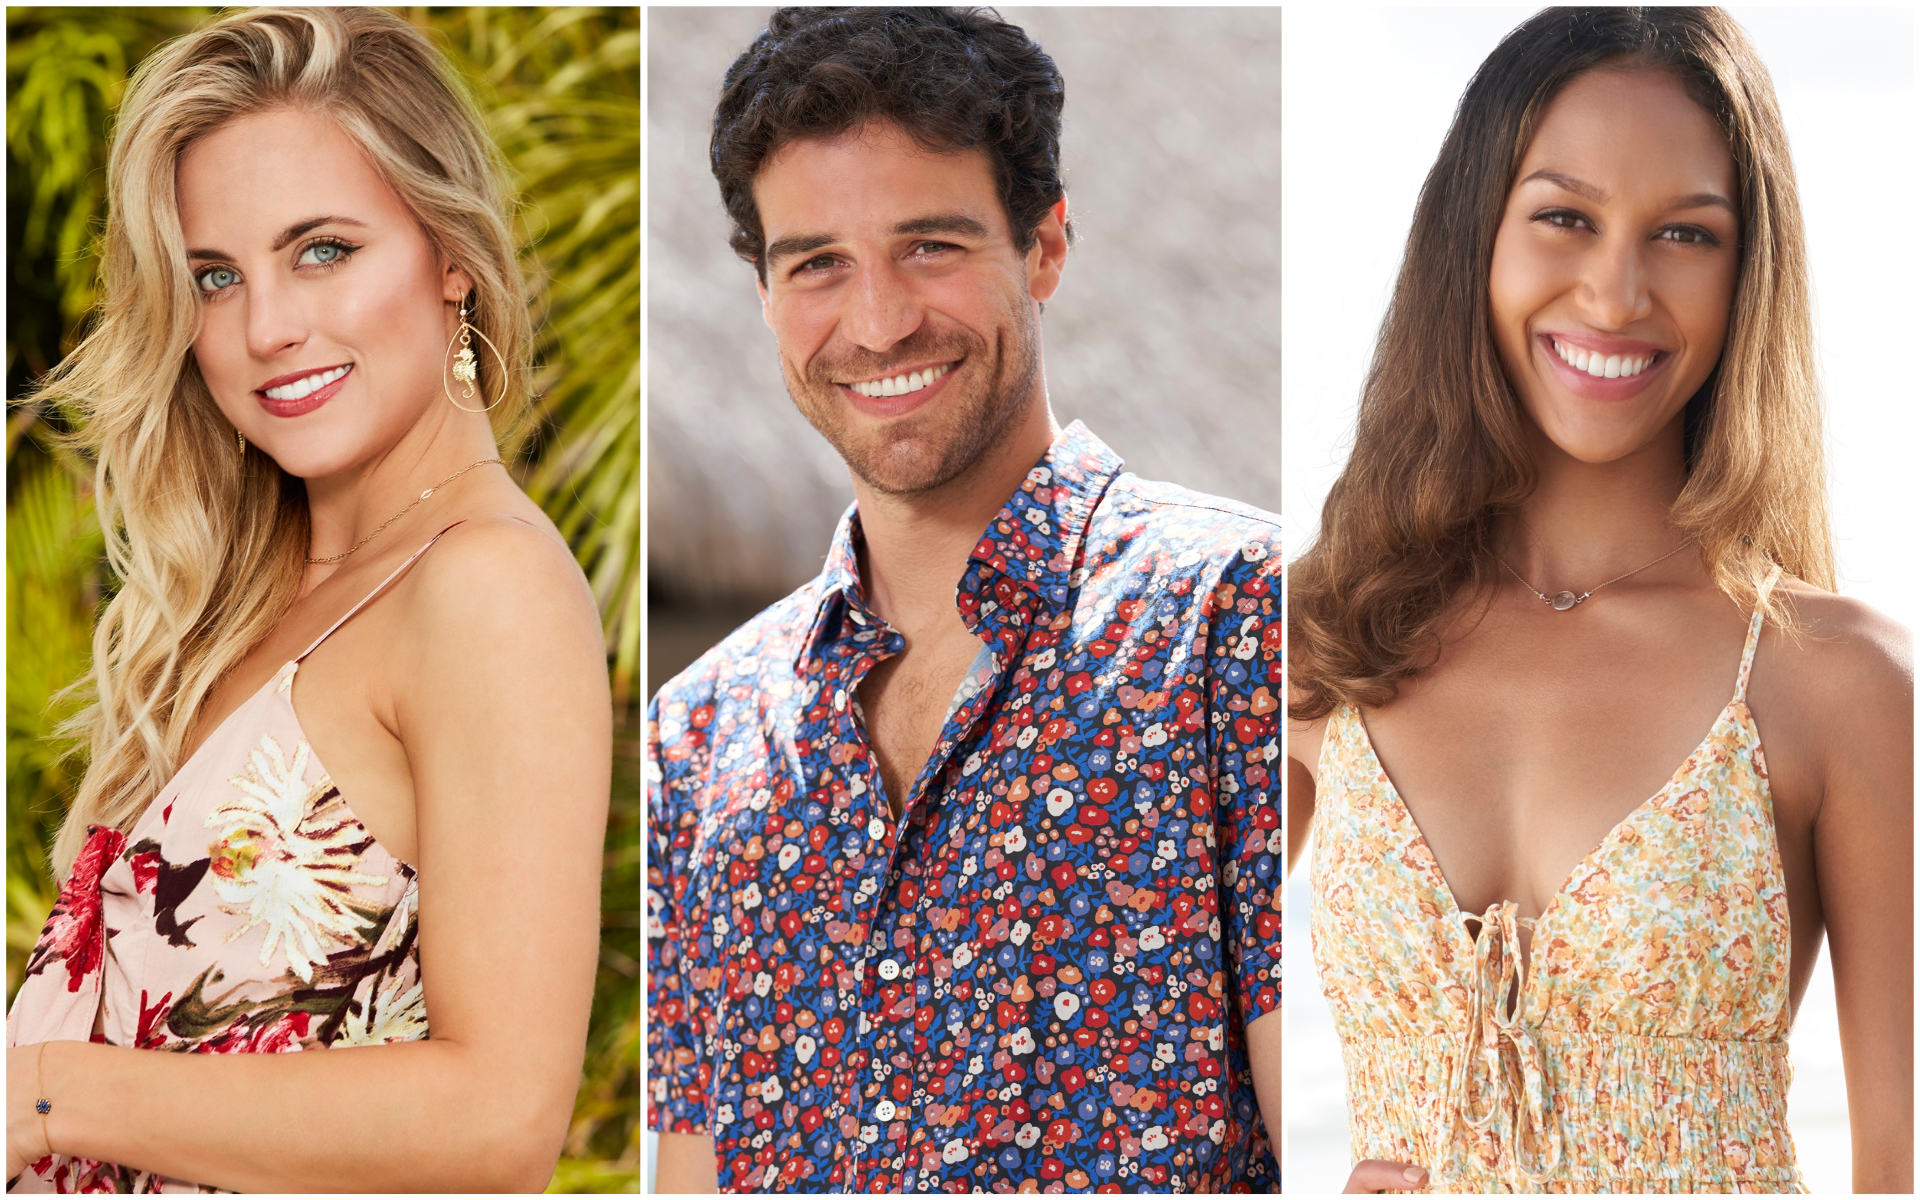 Headshots of Kendall Long, Joe Amabile, and Serena Pitt from ‘Bachelor in Paradise’ 2021